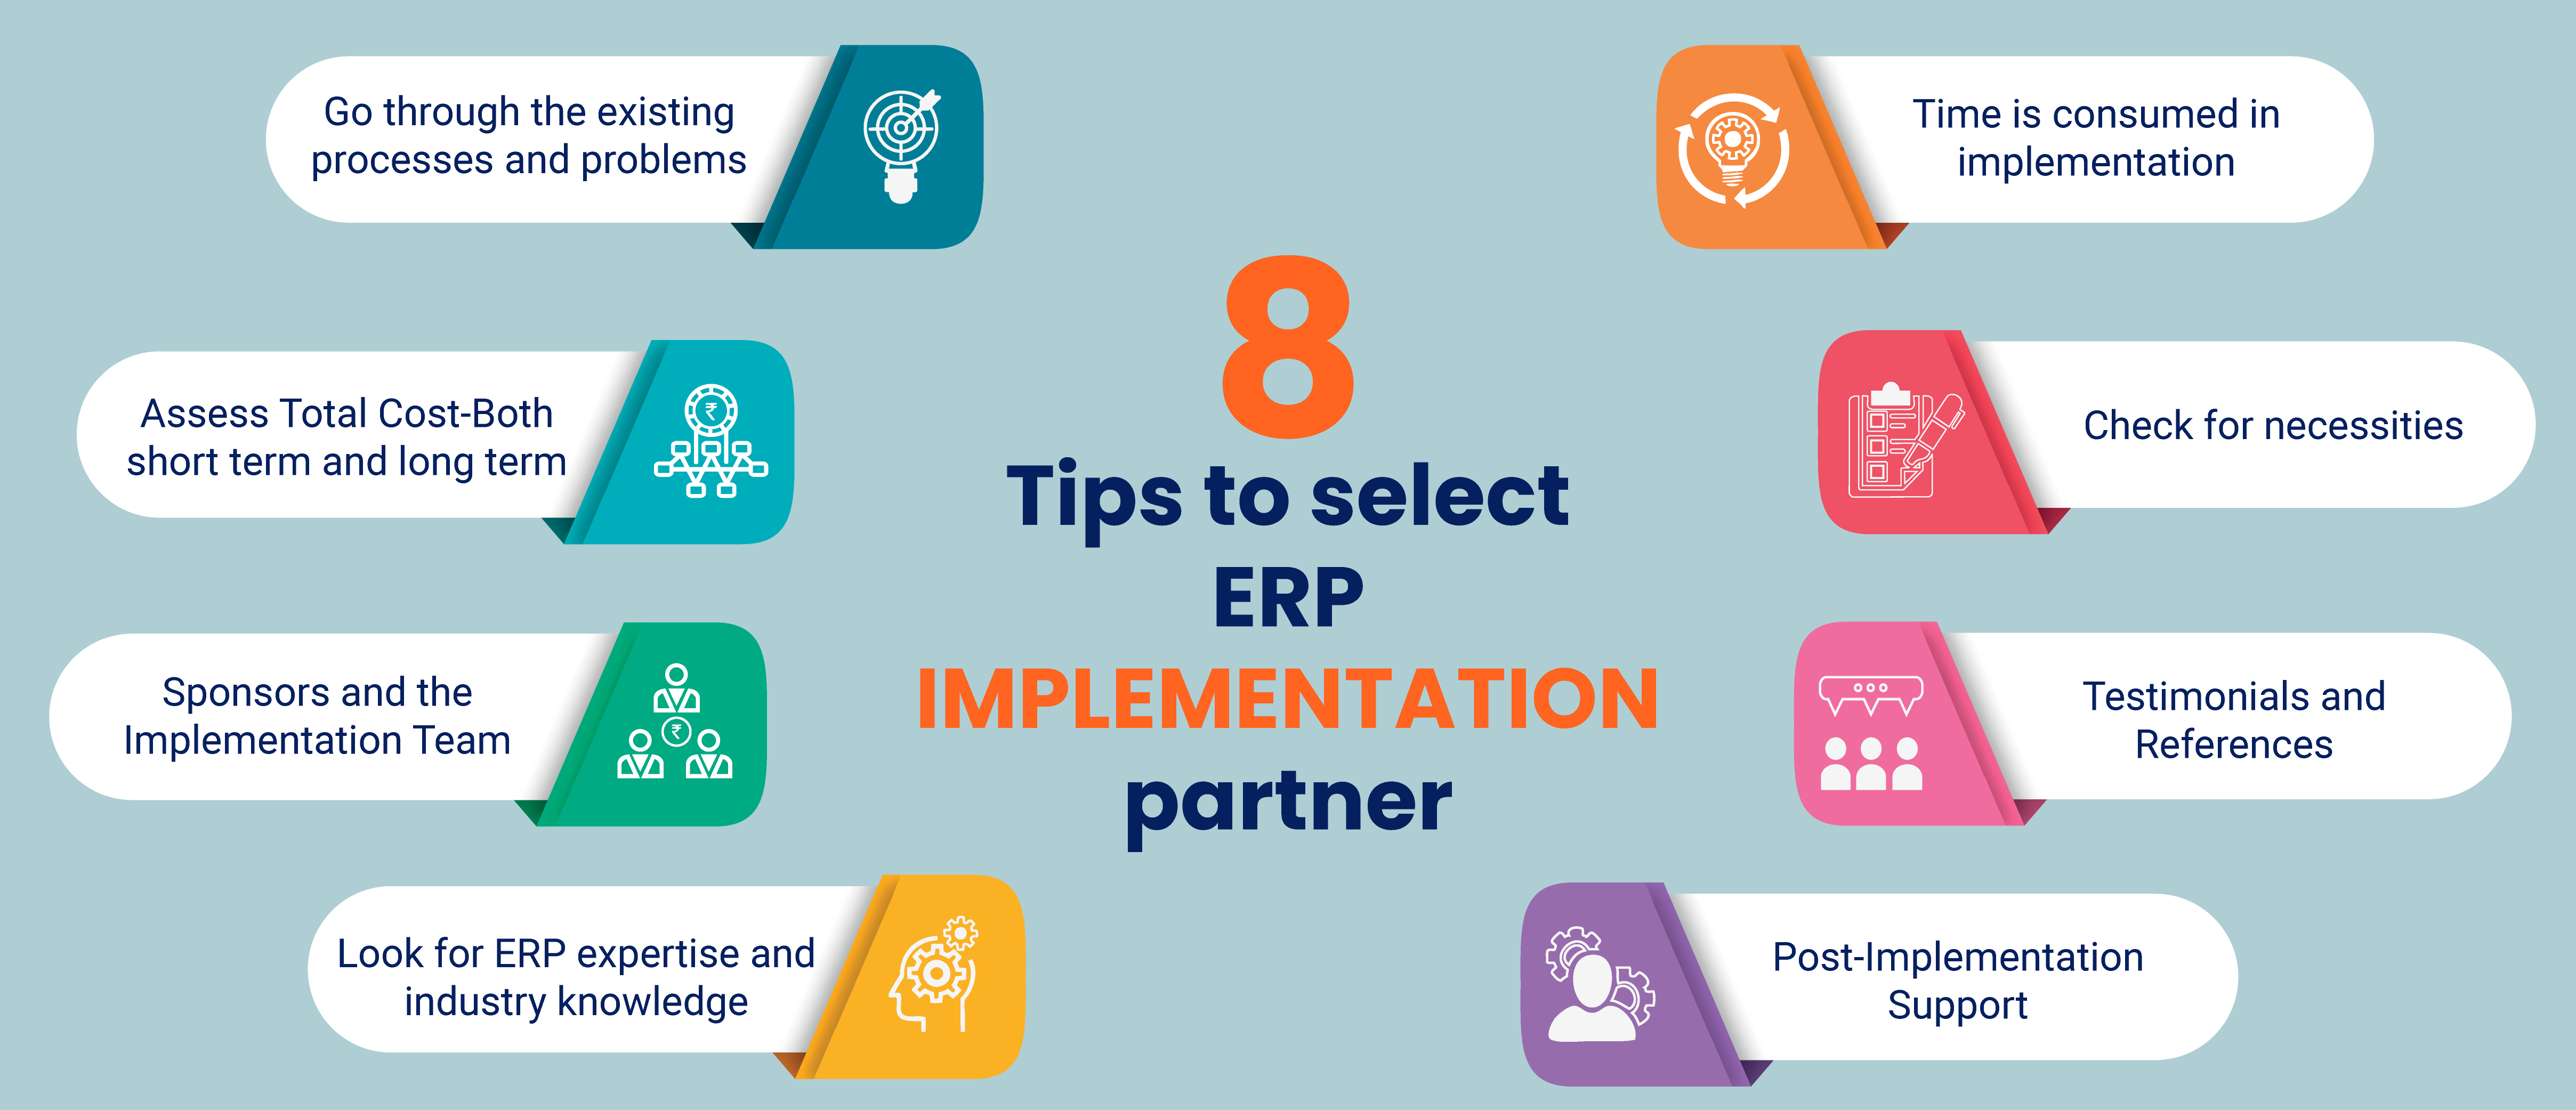 Tips-criteria_ERP-implementation partner